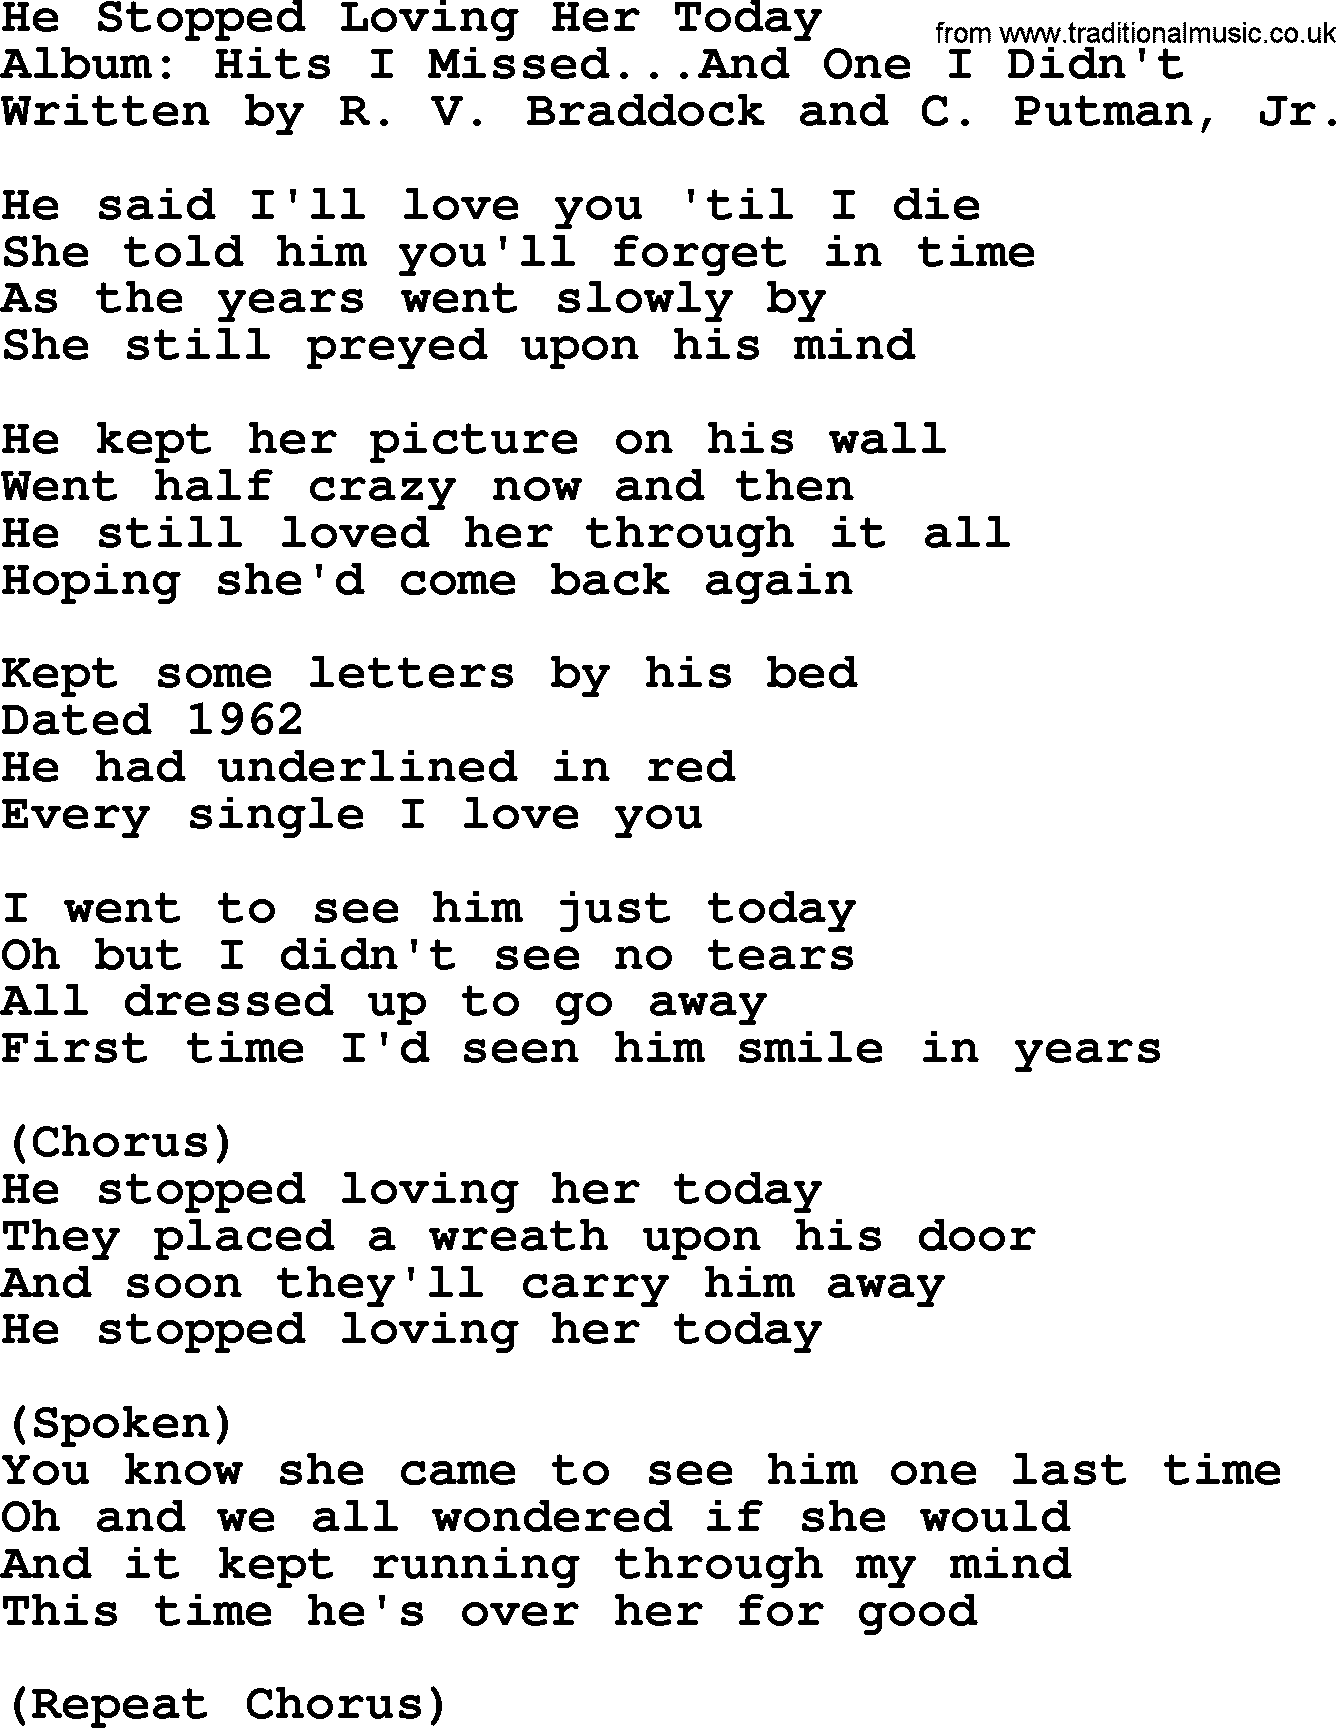 George Jones song: He Stopped Loving Her Today, lyrics